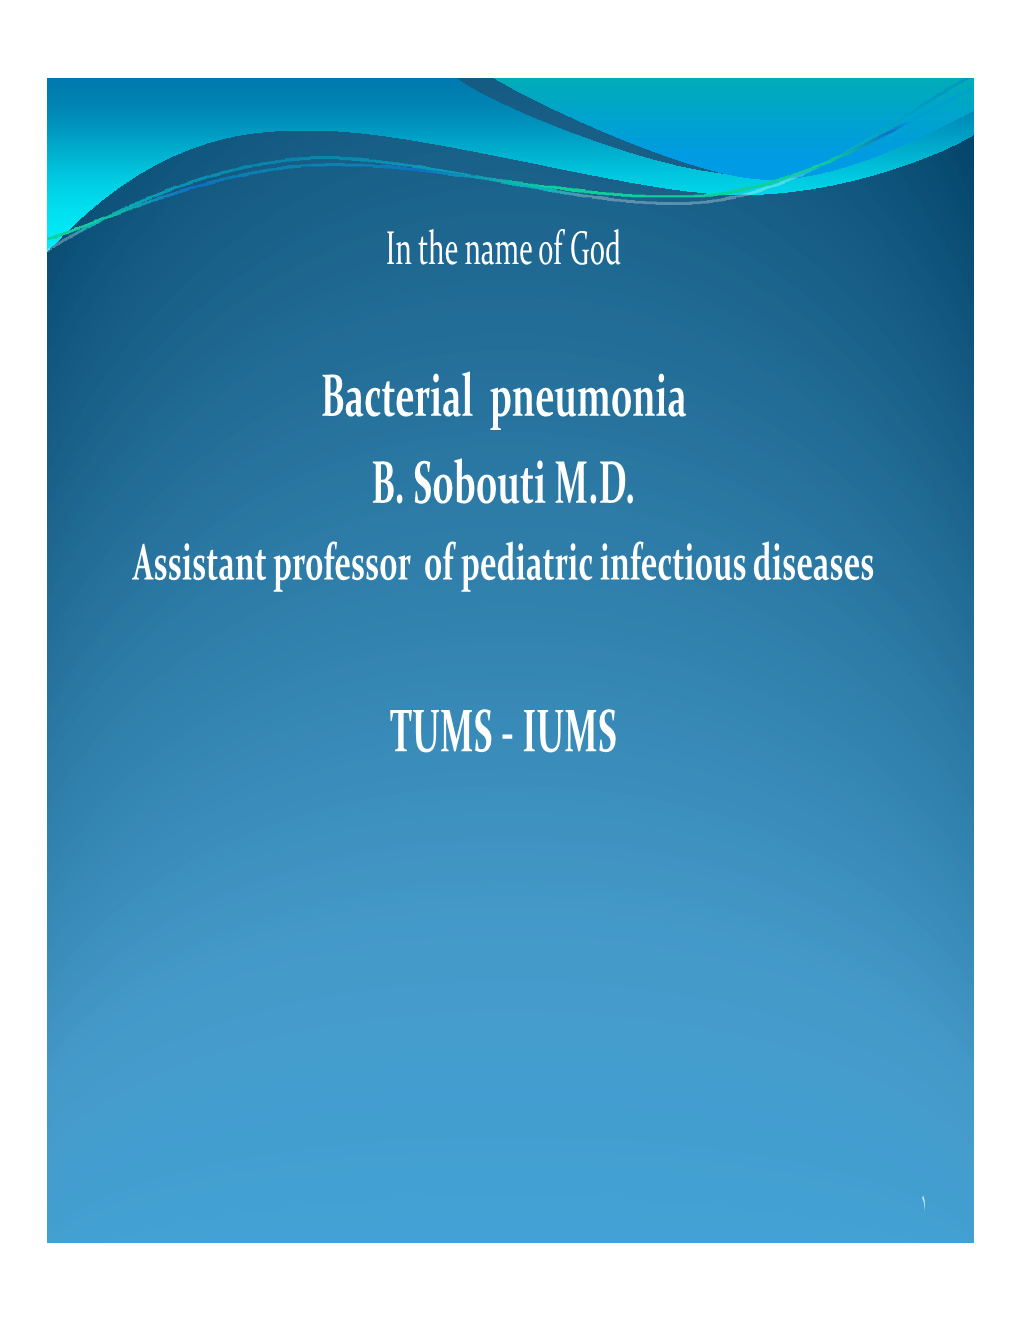 Bacterial Pneumonia B. Sobouti M.D. TUMS